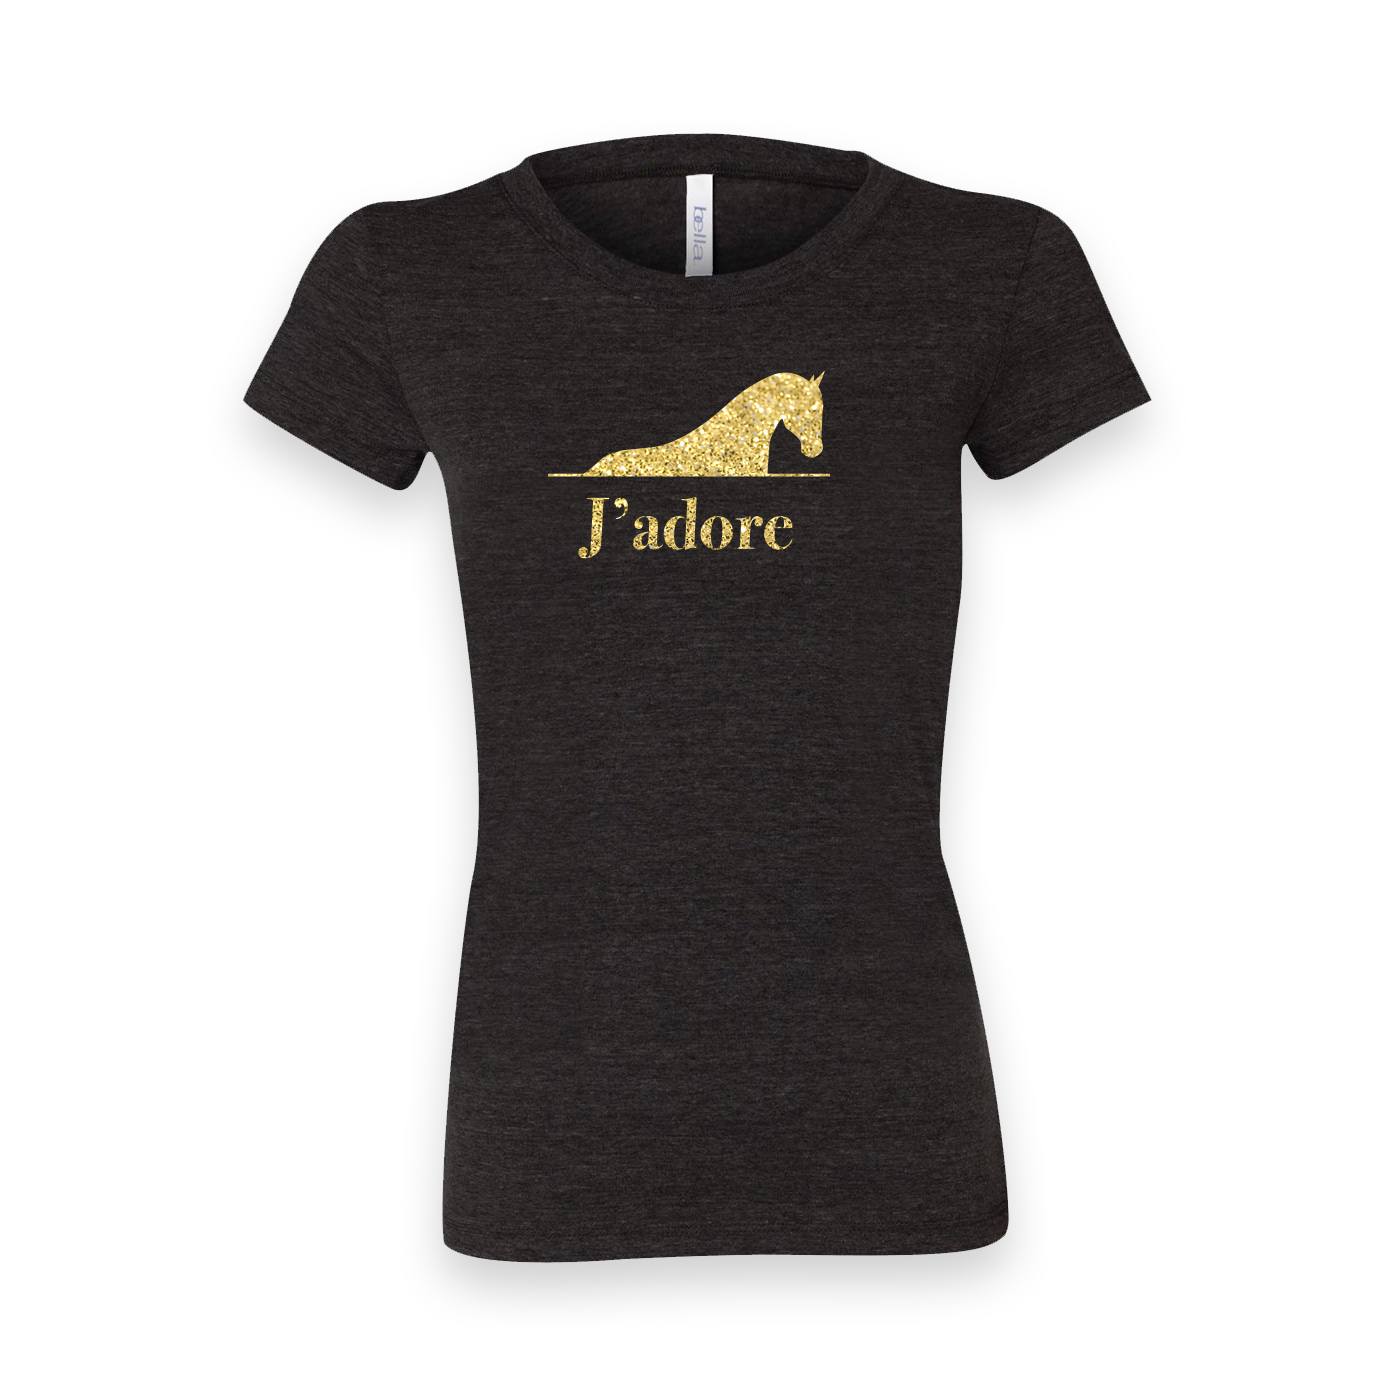 Retiring J'adore - Gold Glitter - T-shirt Women's - Black Heather